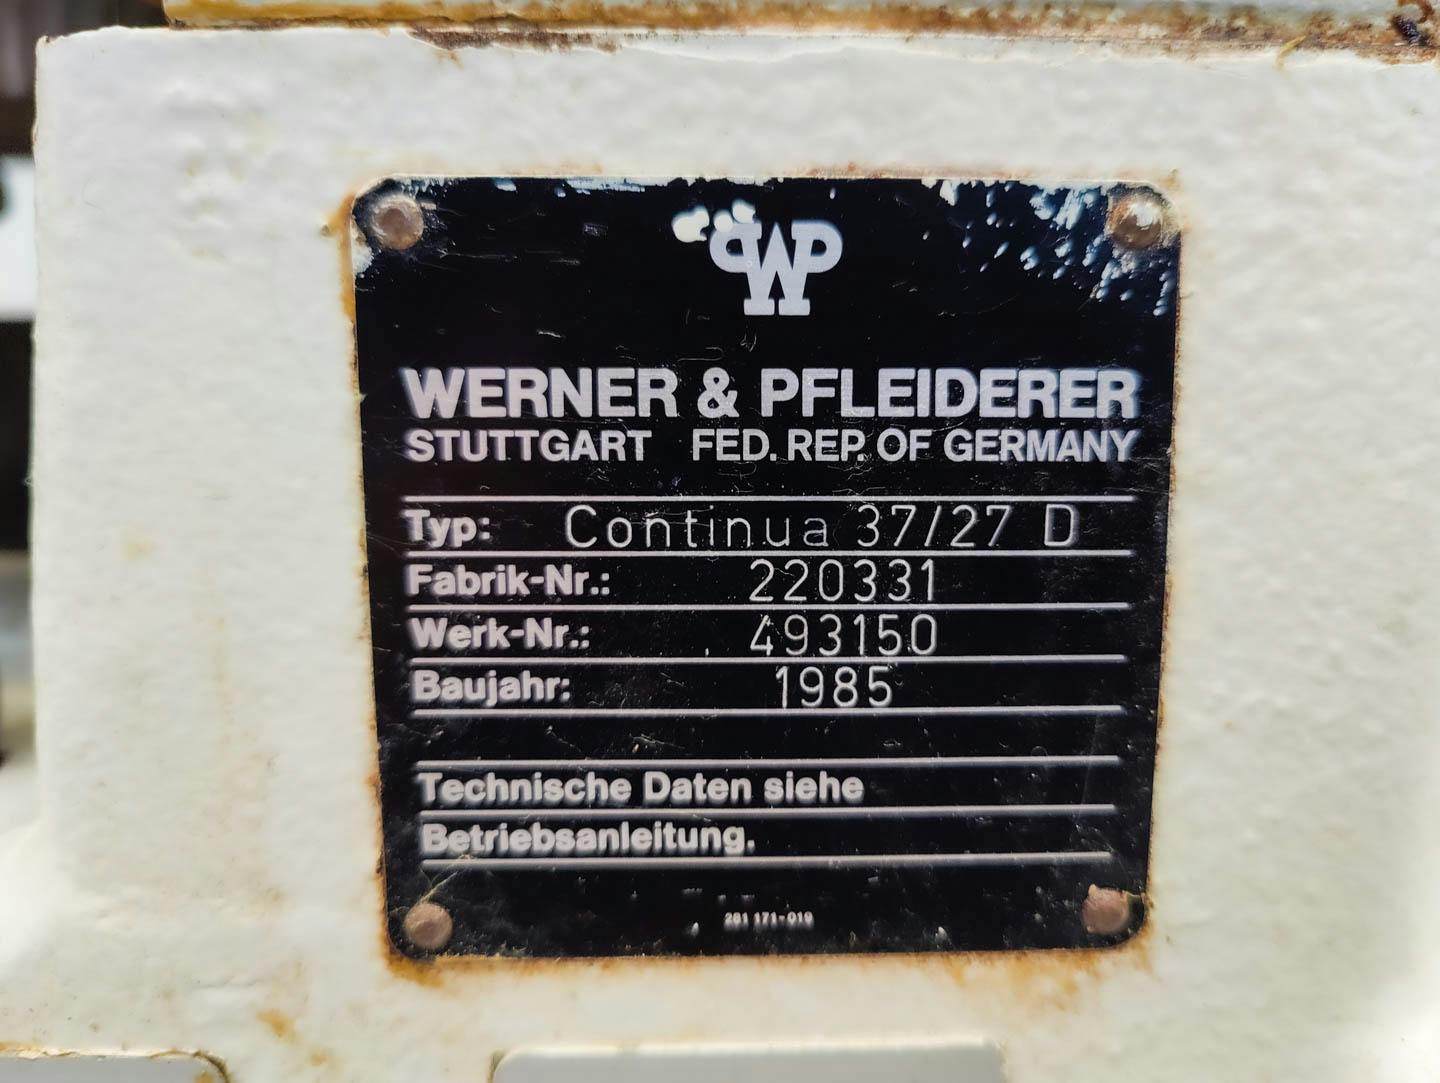 Werner & Pfleiderer Continua 37/27 D - Двухшнековый экструдер - image 12